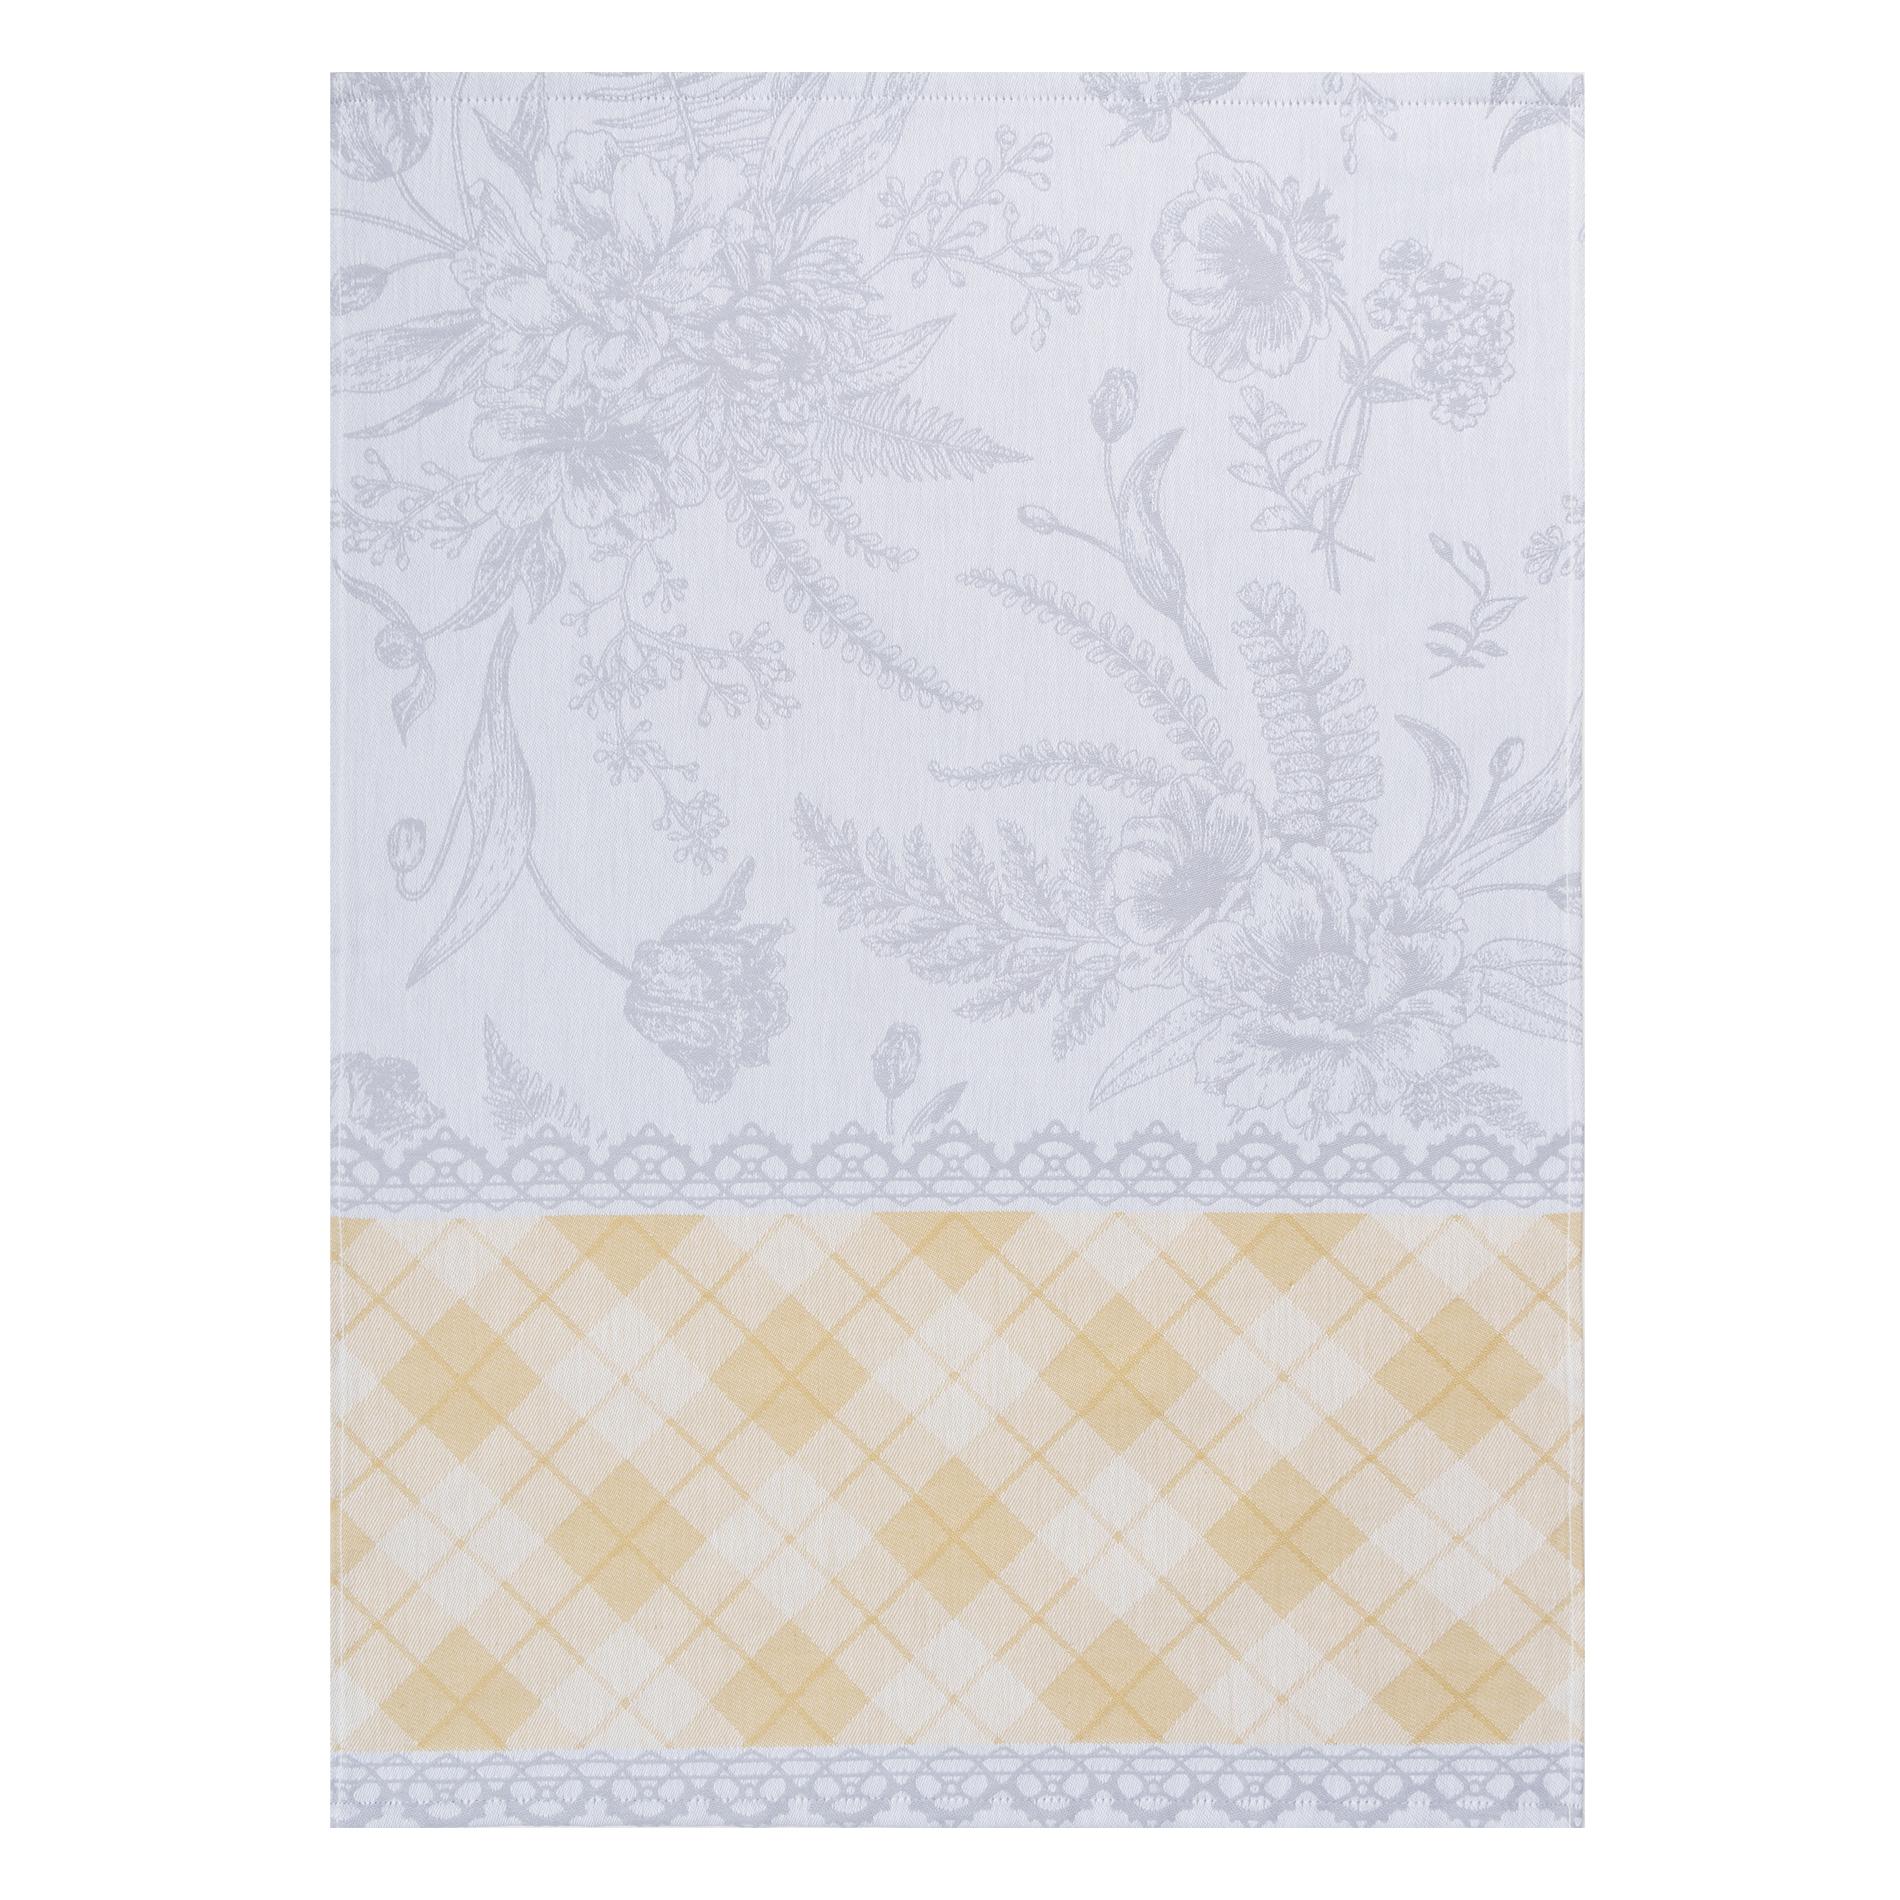 Кухонное полотенце Cleanelly Bouquet белое с жёлтым 50х70 см (ПЦ-556-4840)